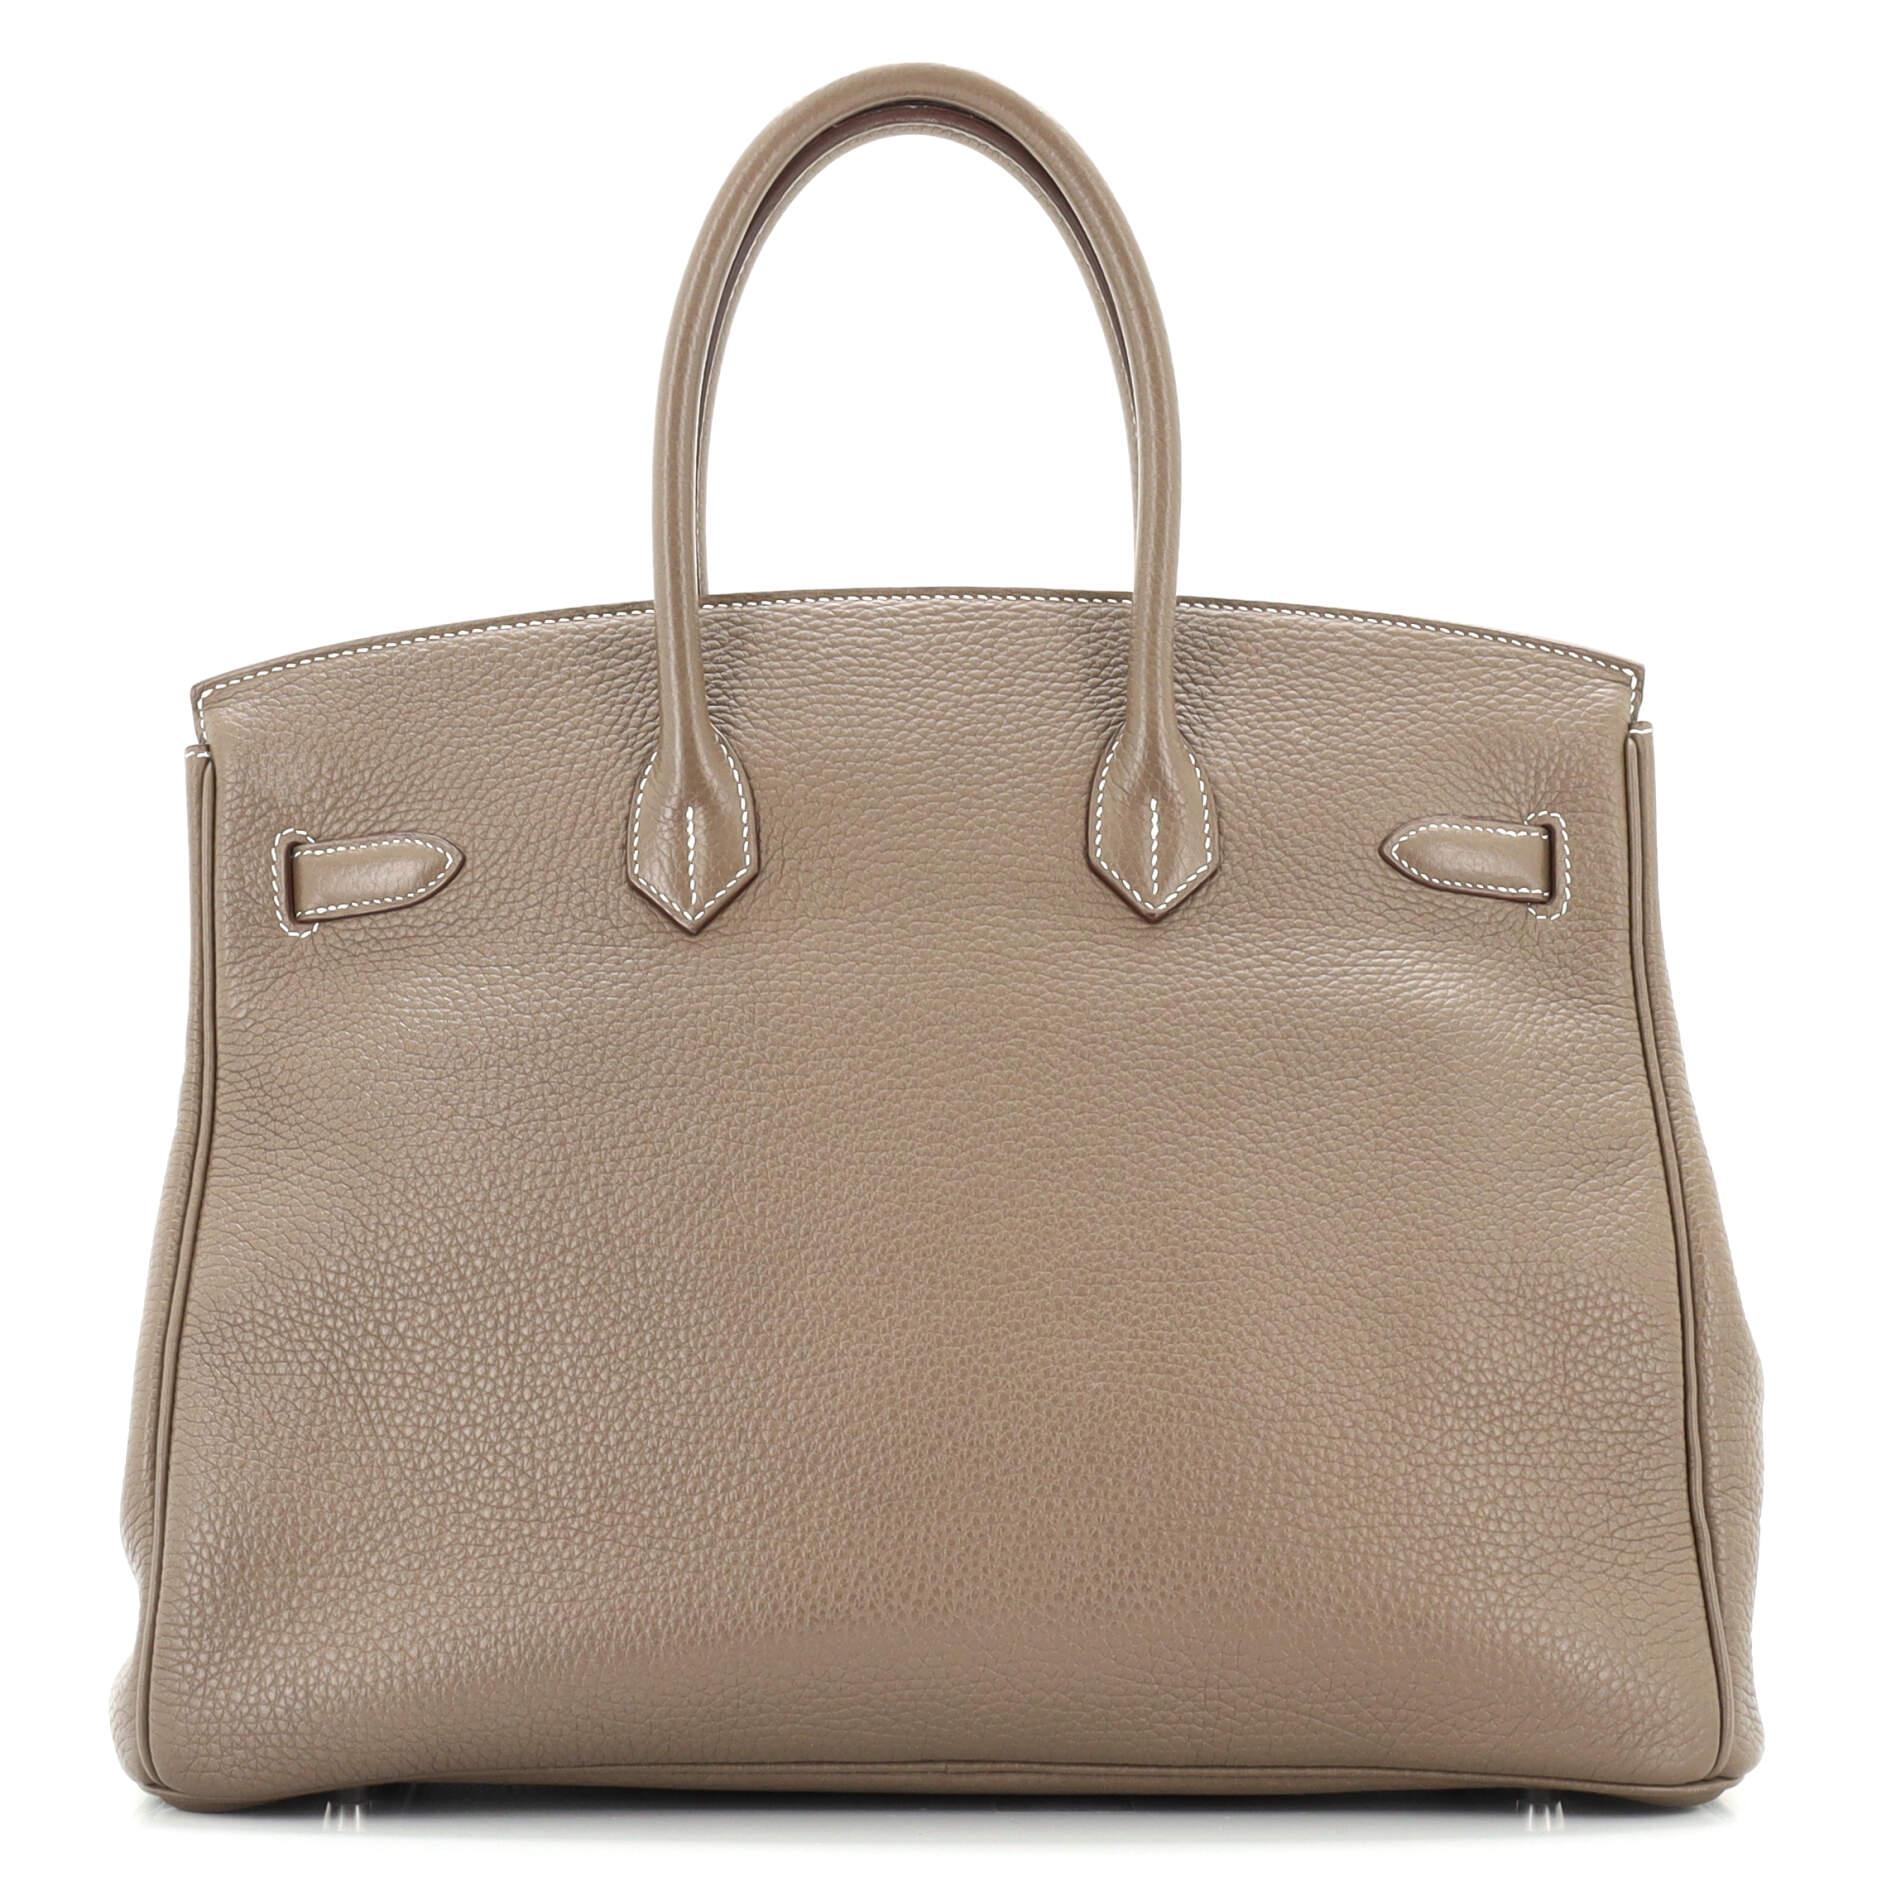 Brown Hermes Birkin Handbag Grey Clemence with Palladium Hardware 35